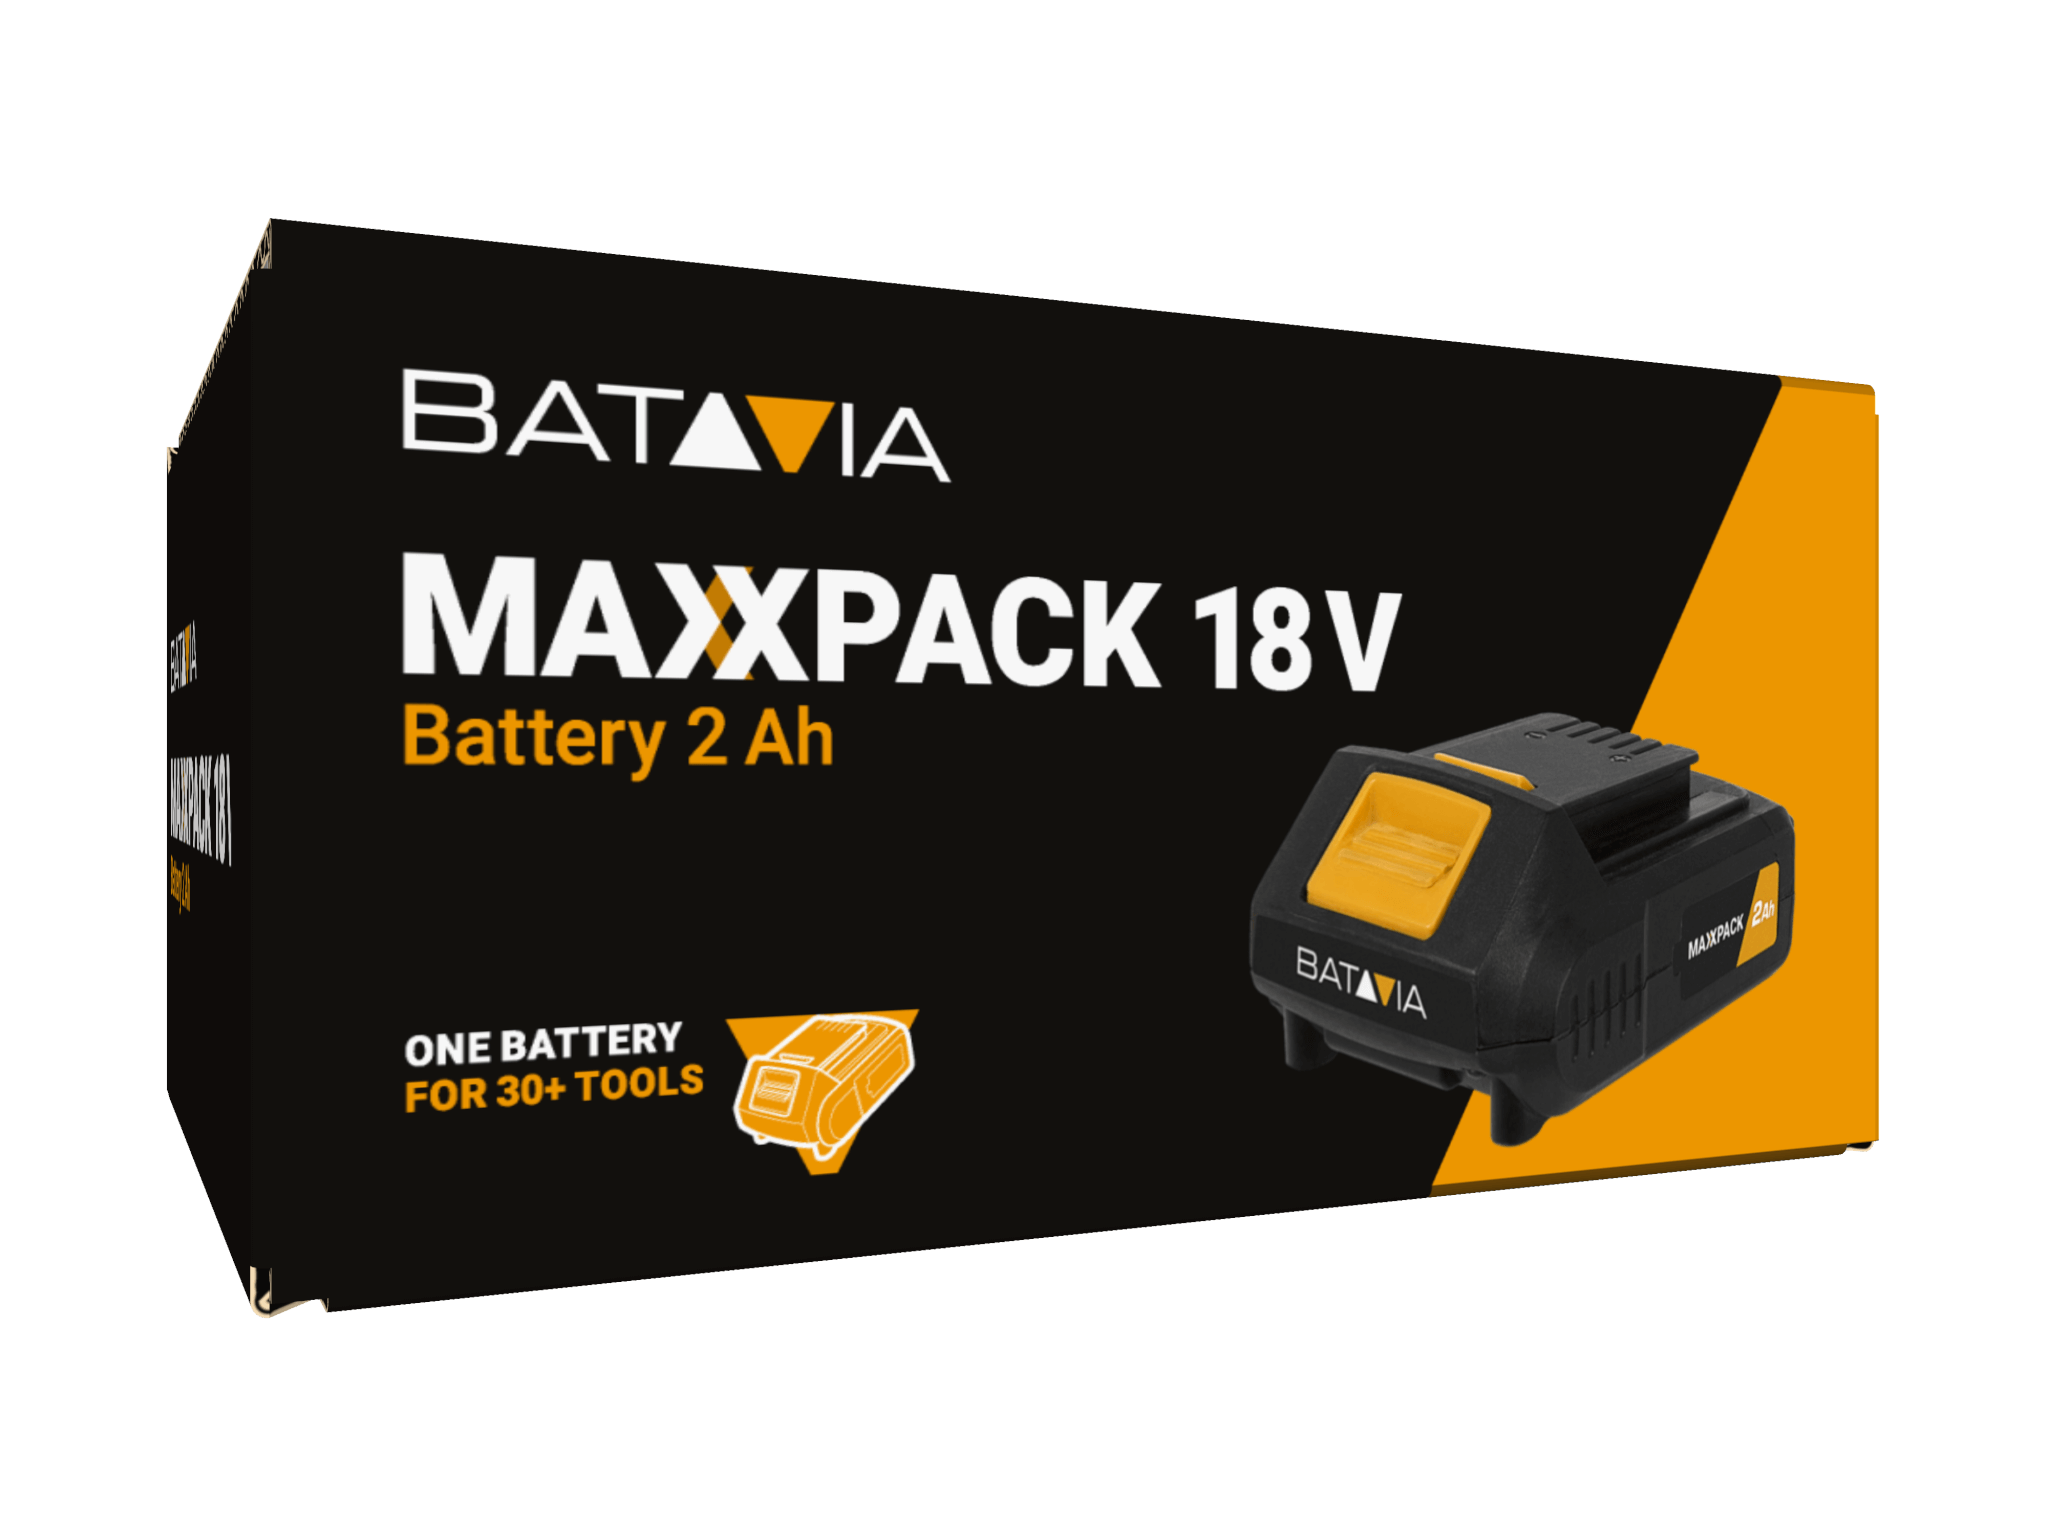 Packaging 2.0Ah Battery | Batavia | Maxxpack collection